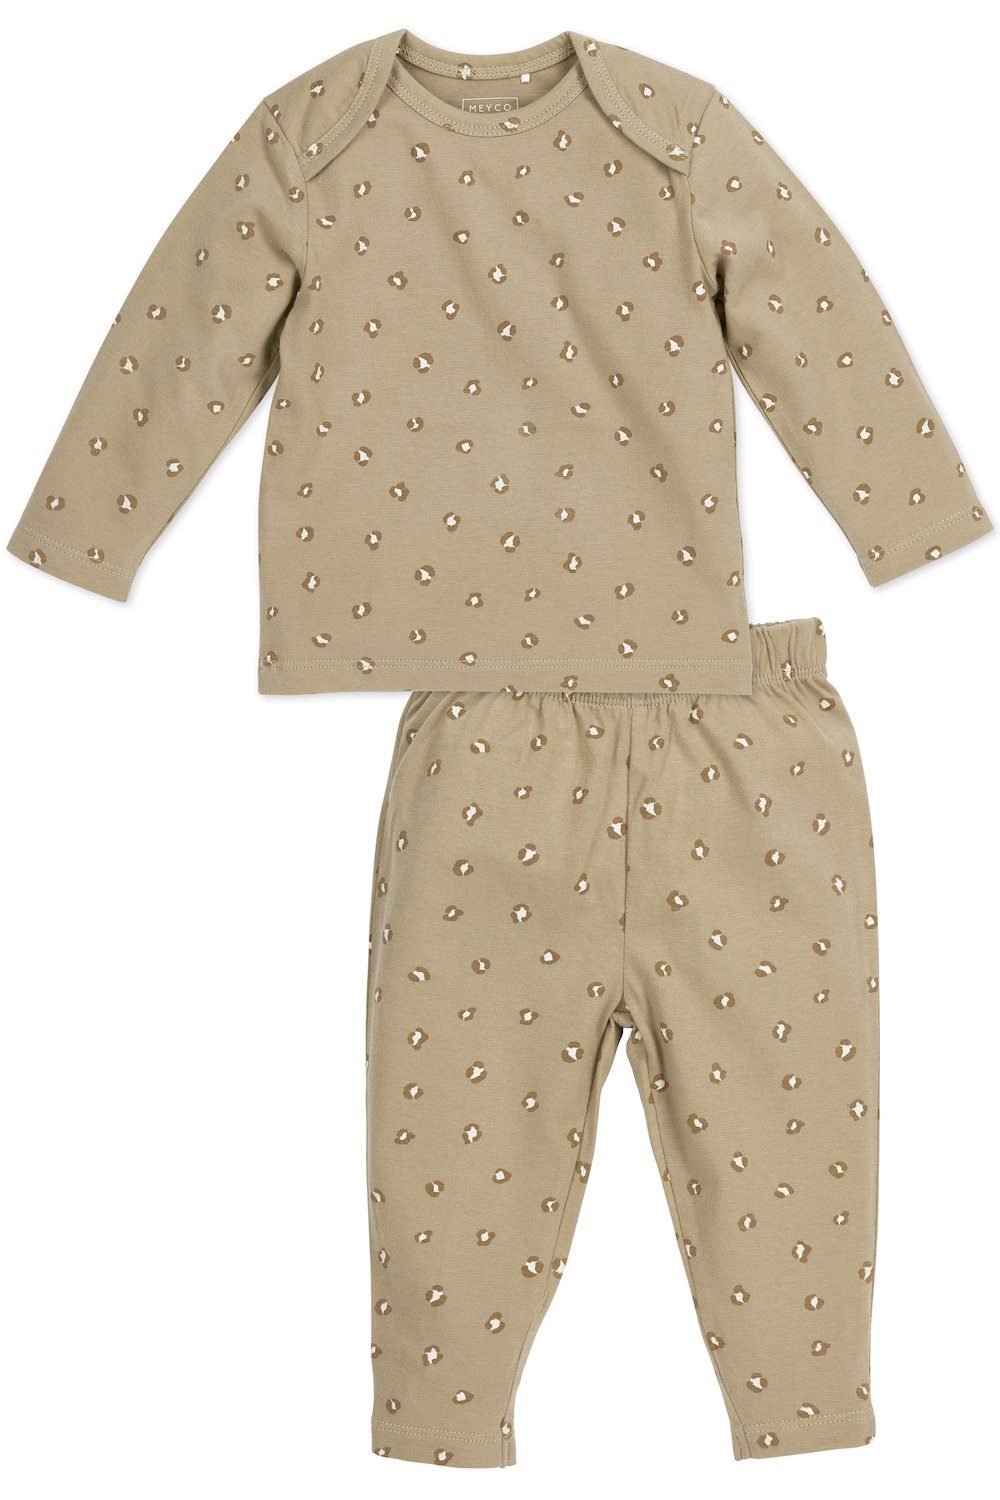 Meyco Baby Pyjama Mini Panther Sand (1 tlg) 50/56